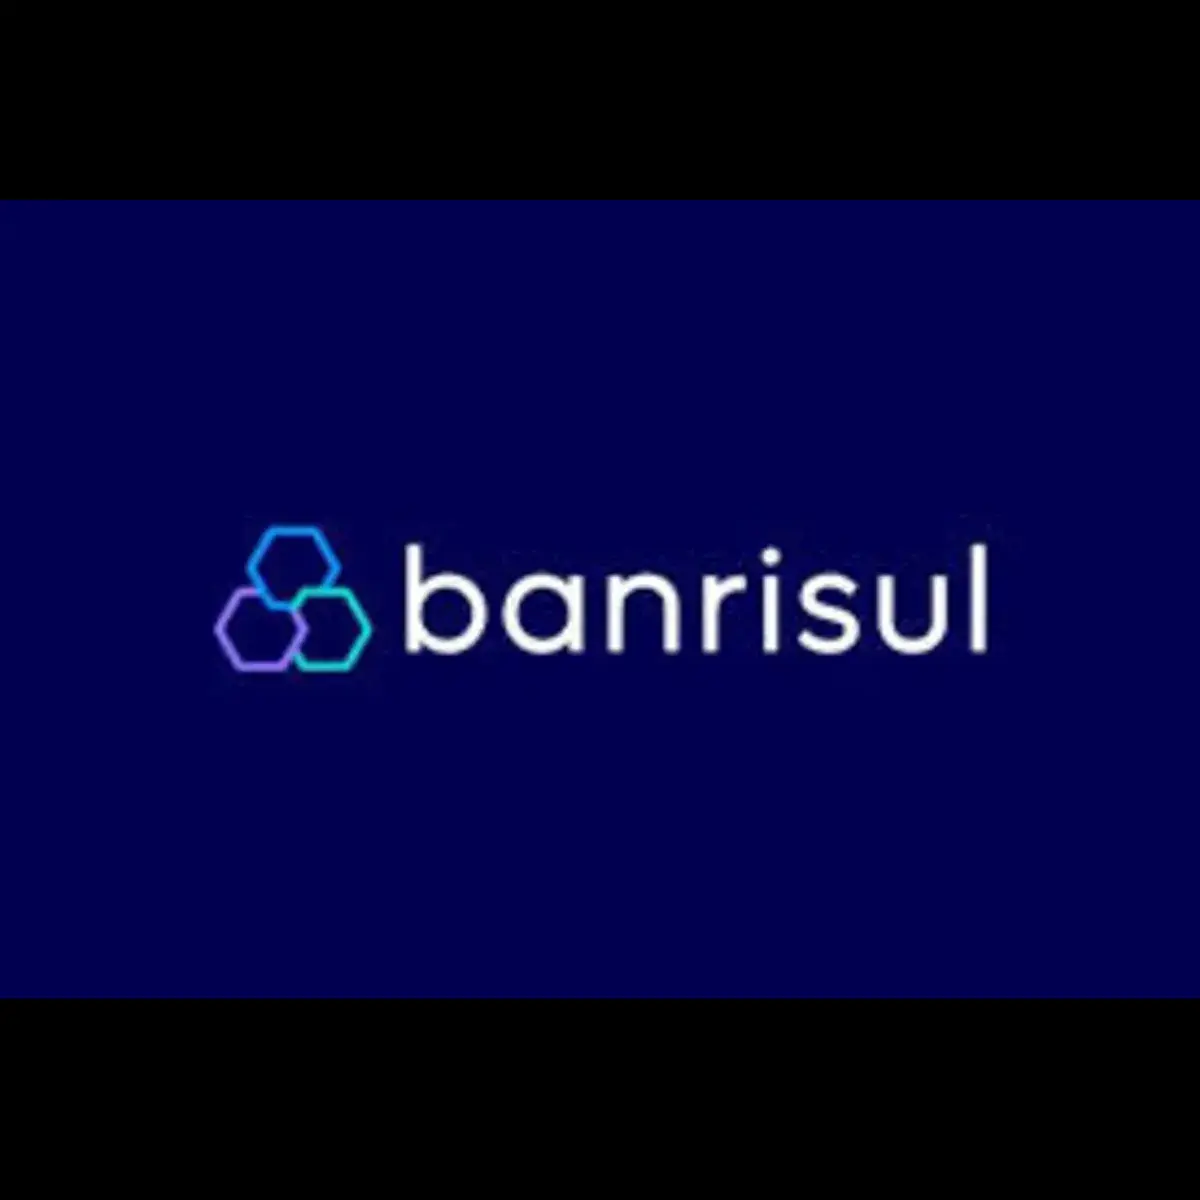 banco Banrisul